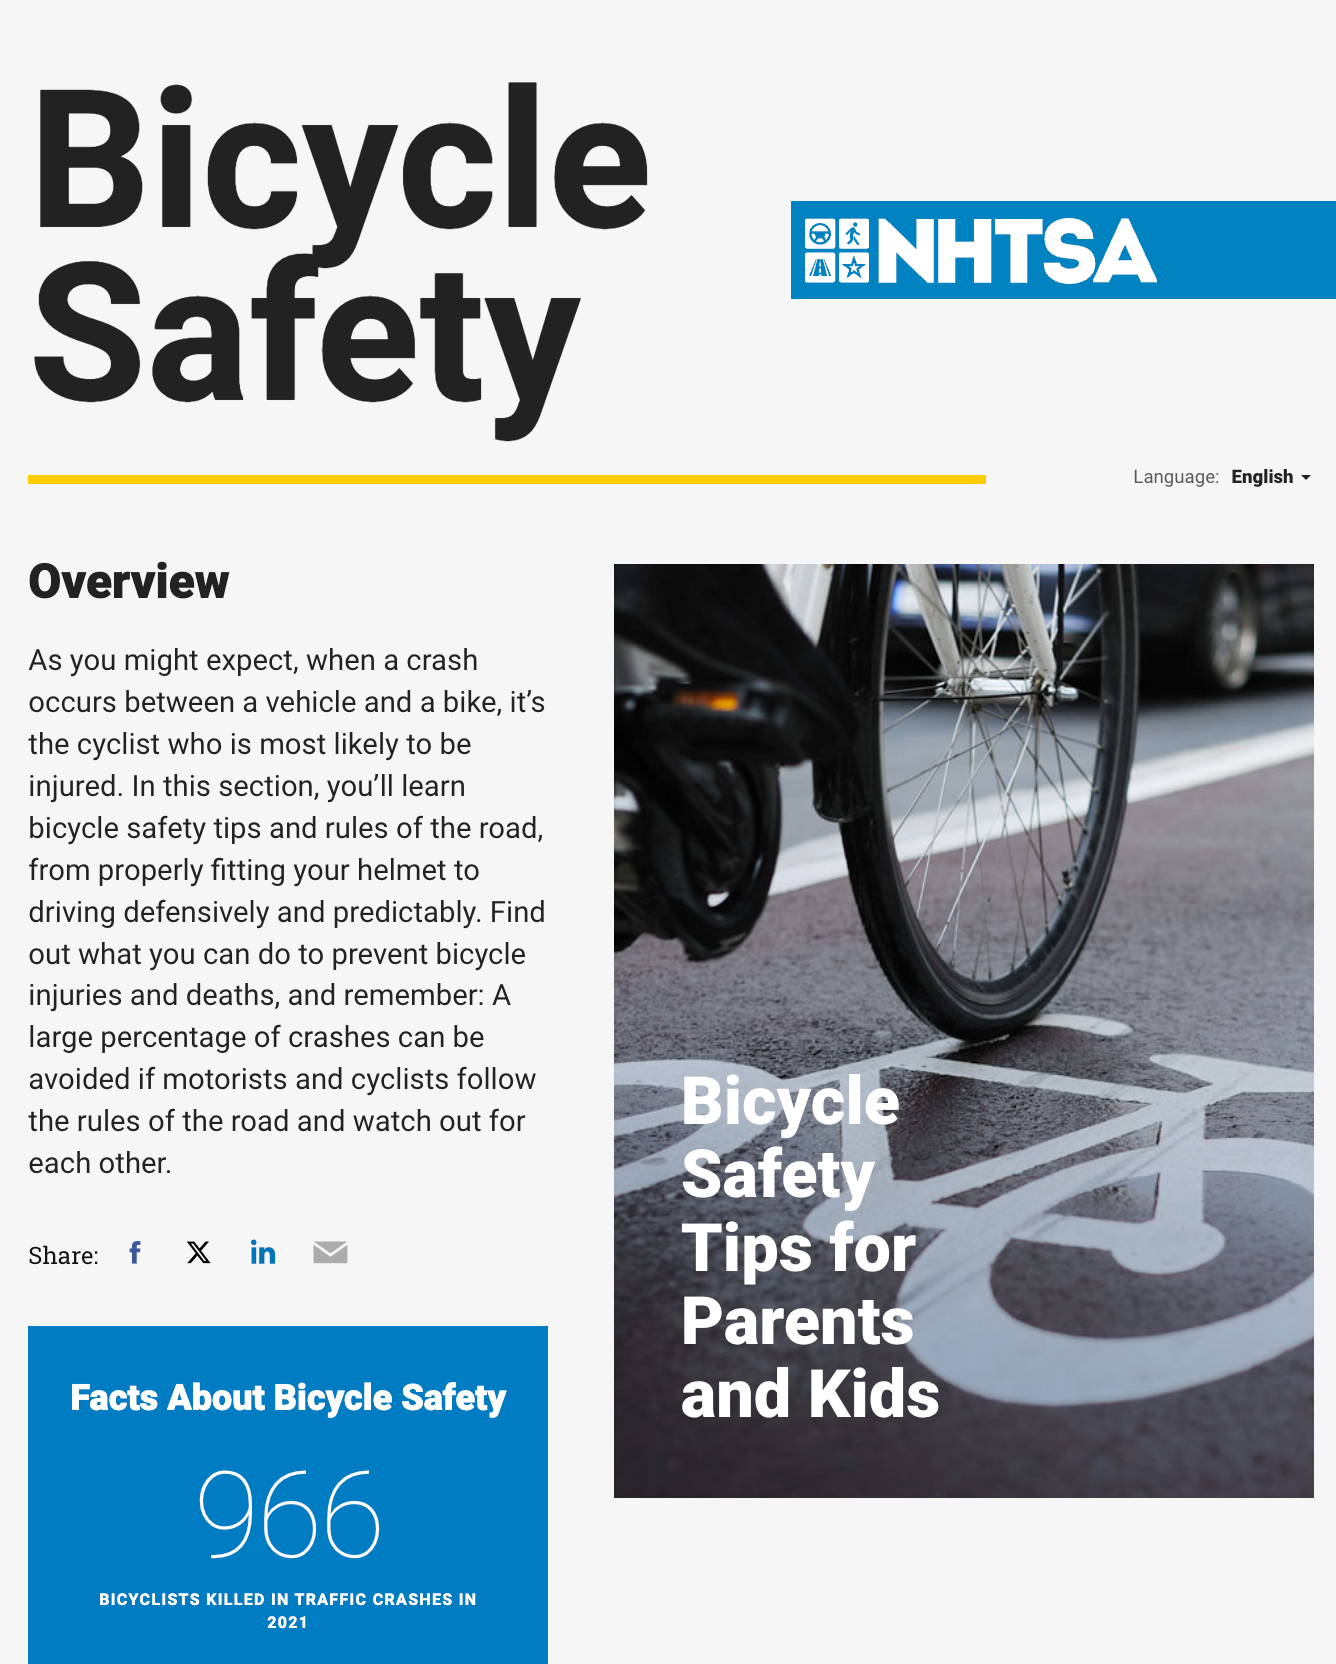 NHTSA Bicycle Safety Page